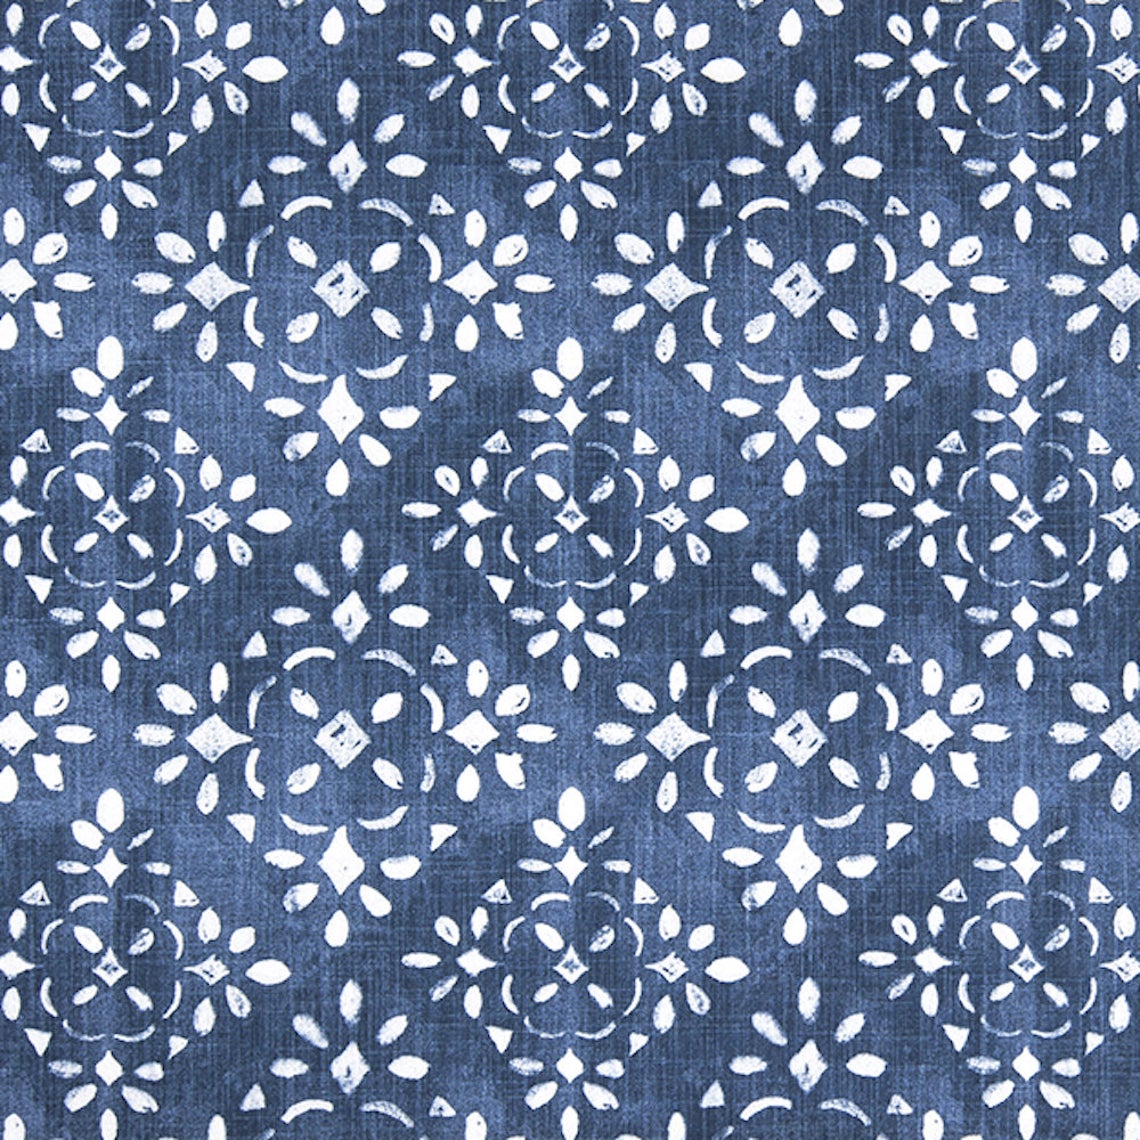 tailored tier cafe curtain panels pair in avila prussian blue farmhouse floral lattice